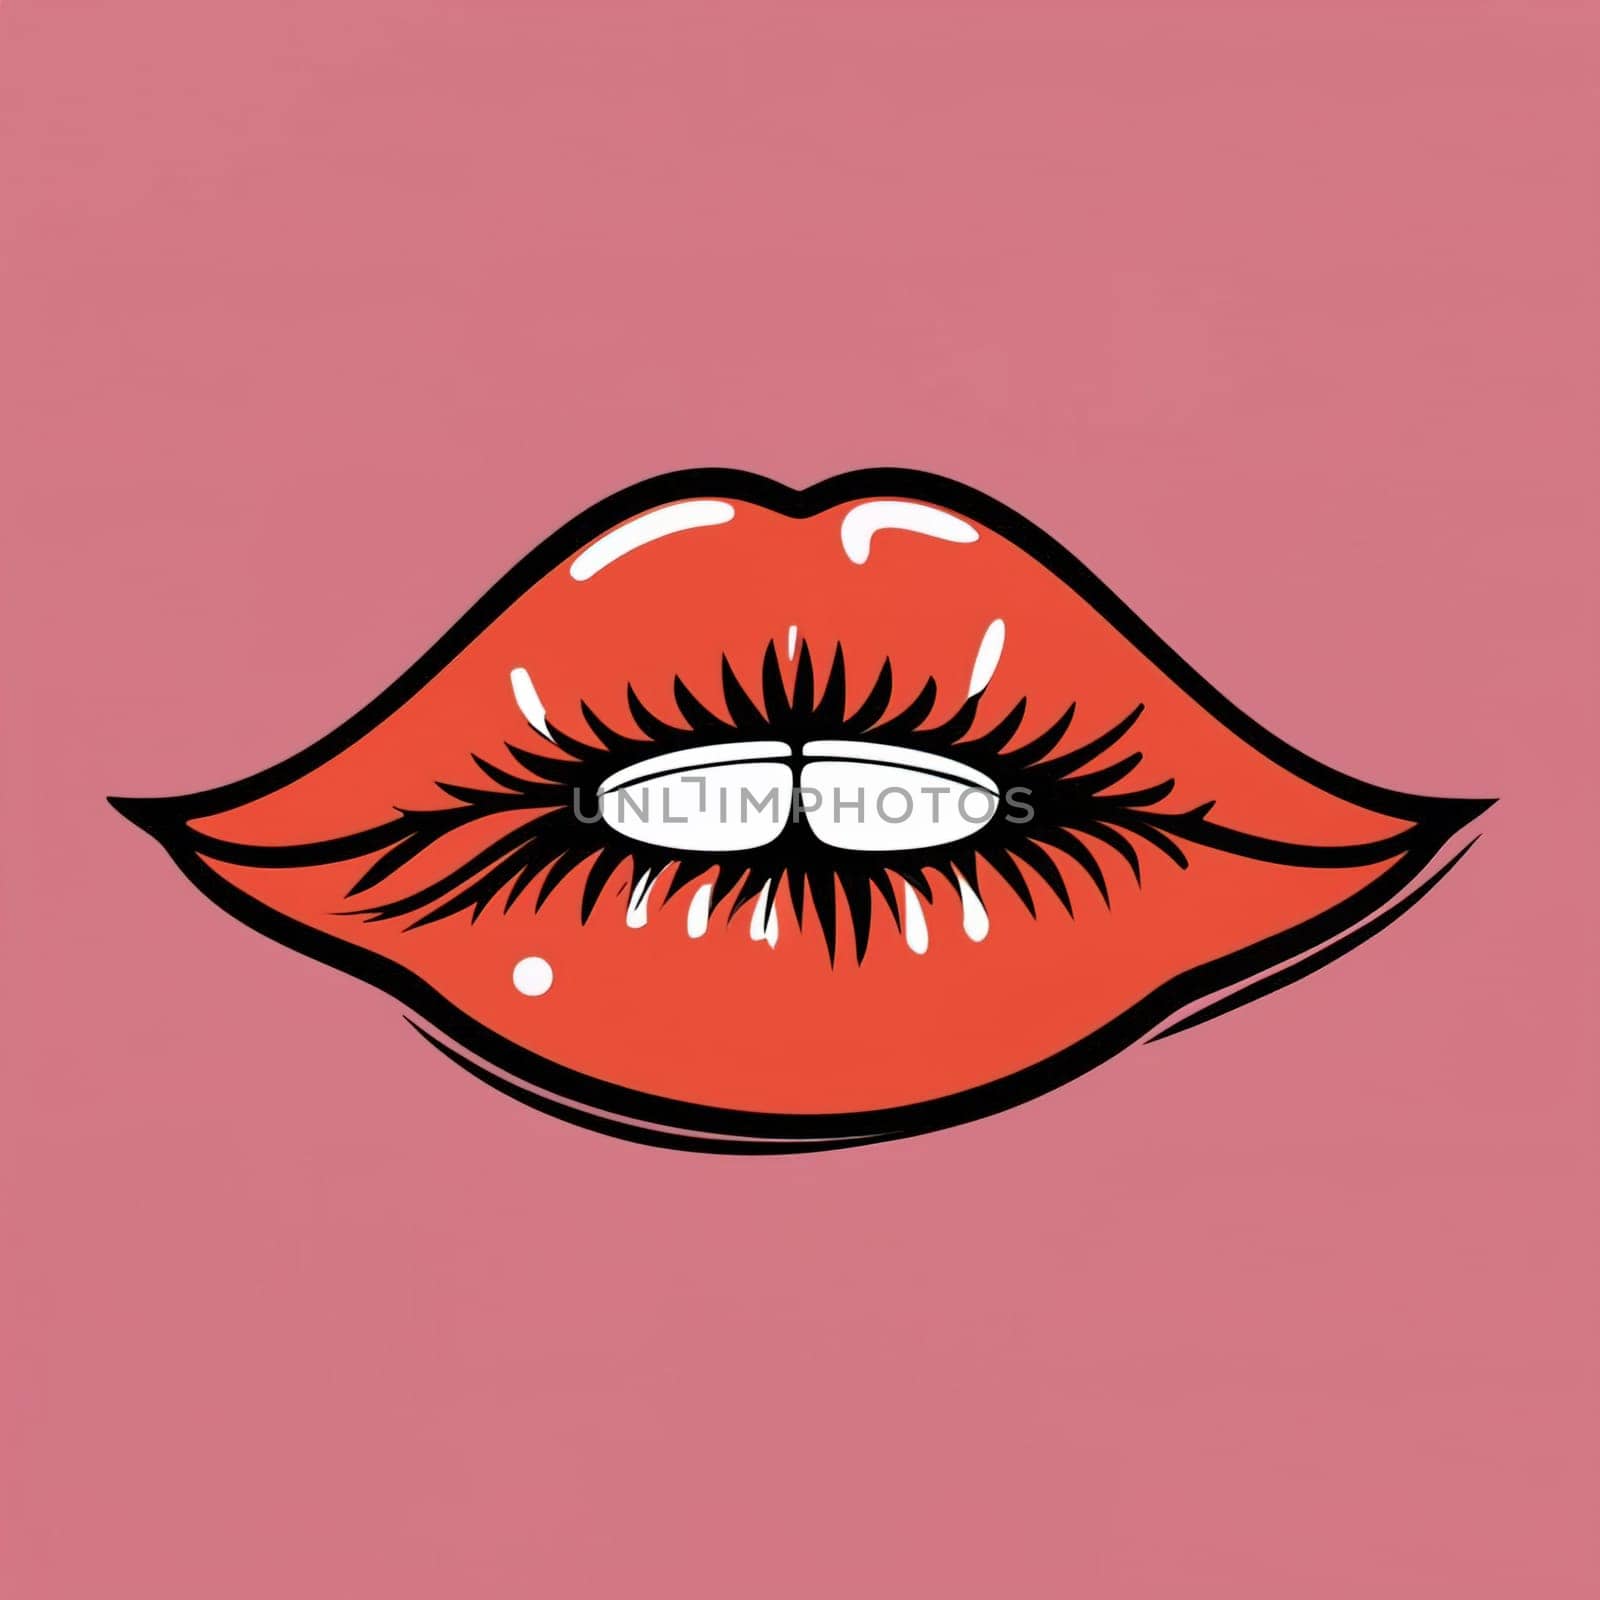 T-shirt Design with Seductive Female Lips - Fashionable Apparel Art by igor010